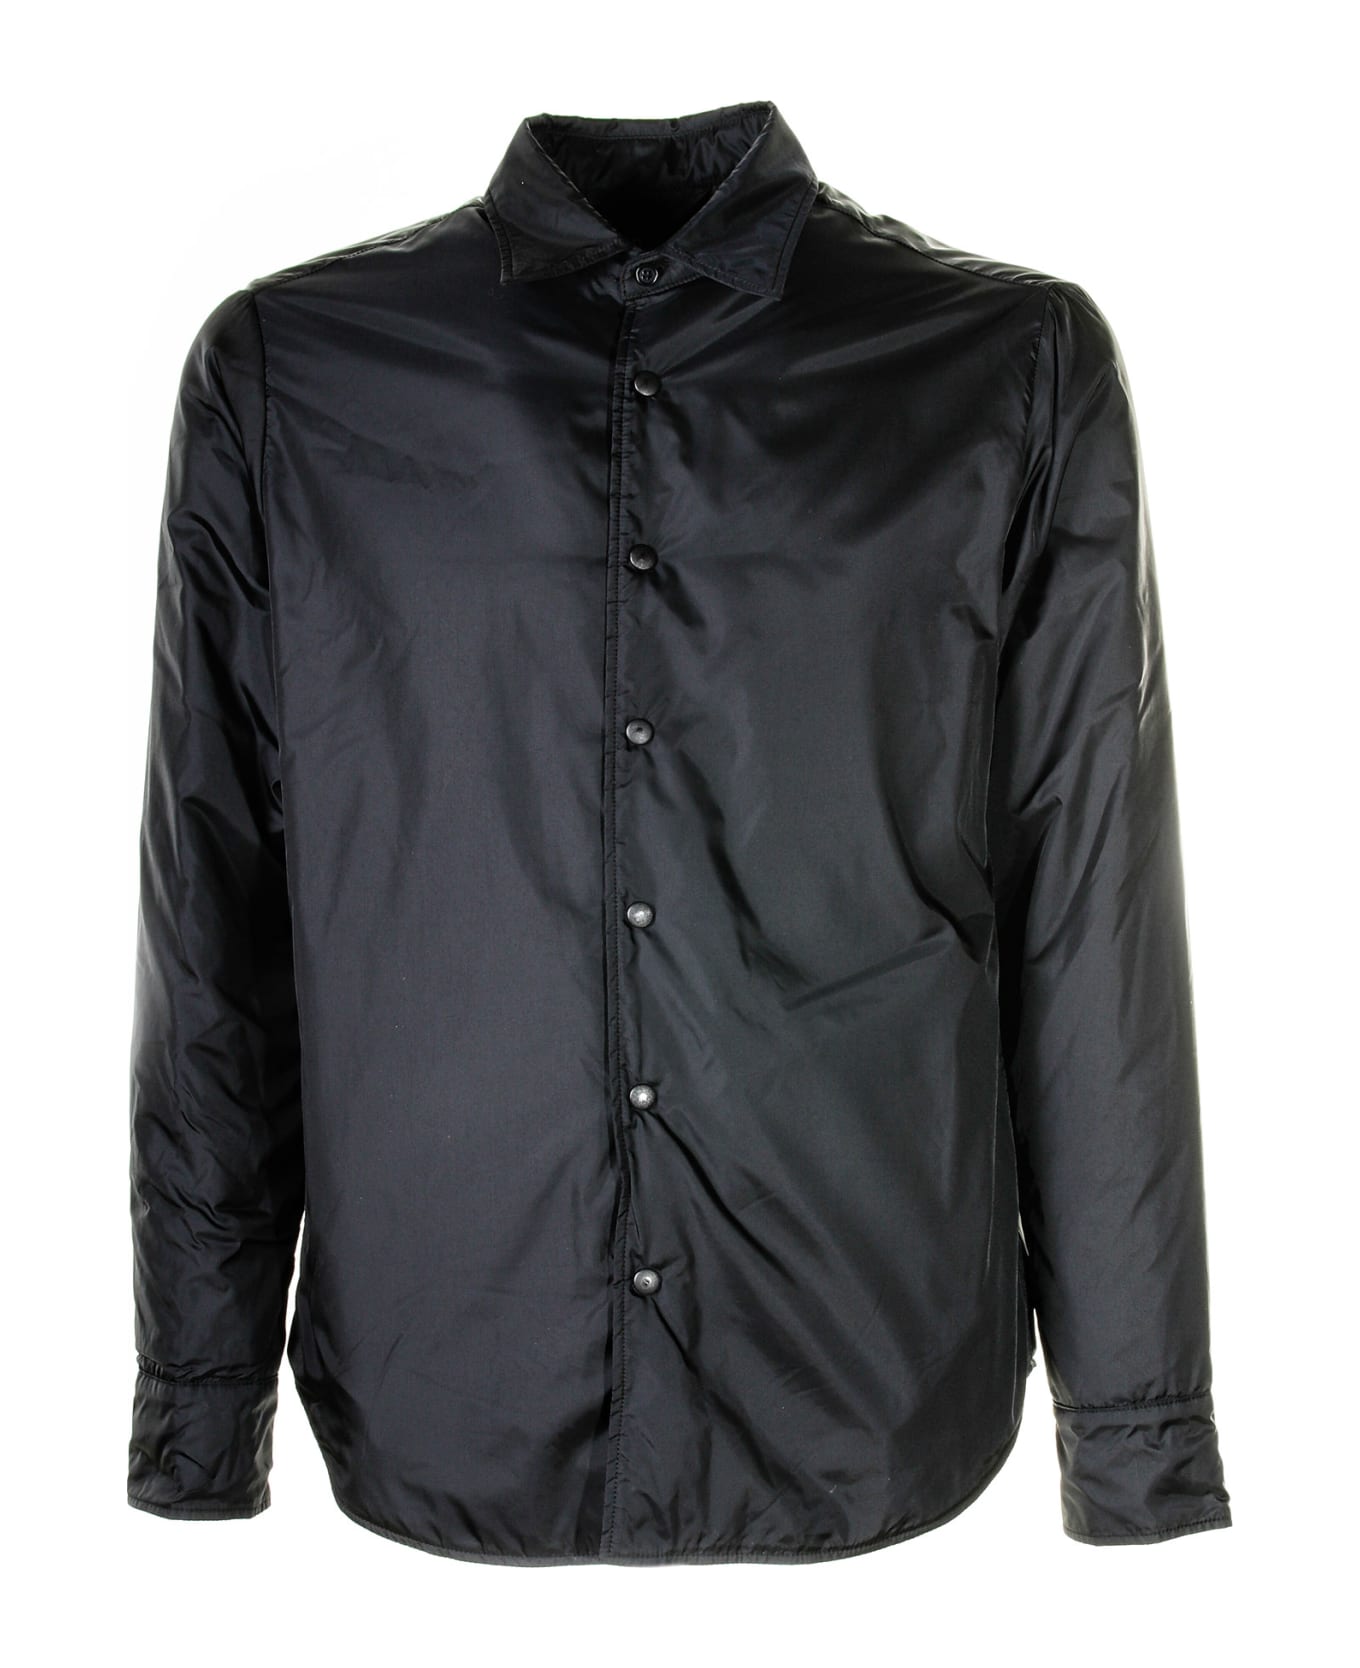 Aspesi Shirt Jacket With Buttons - BLACK NERO